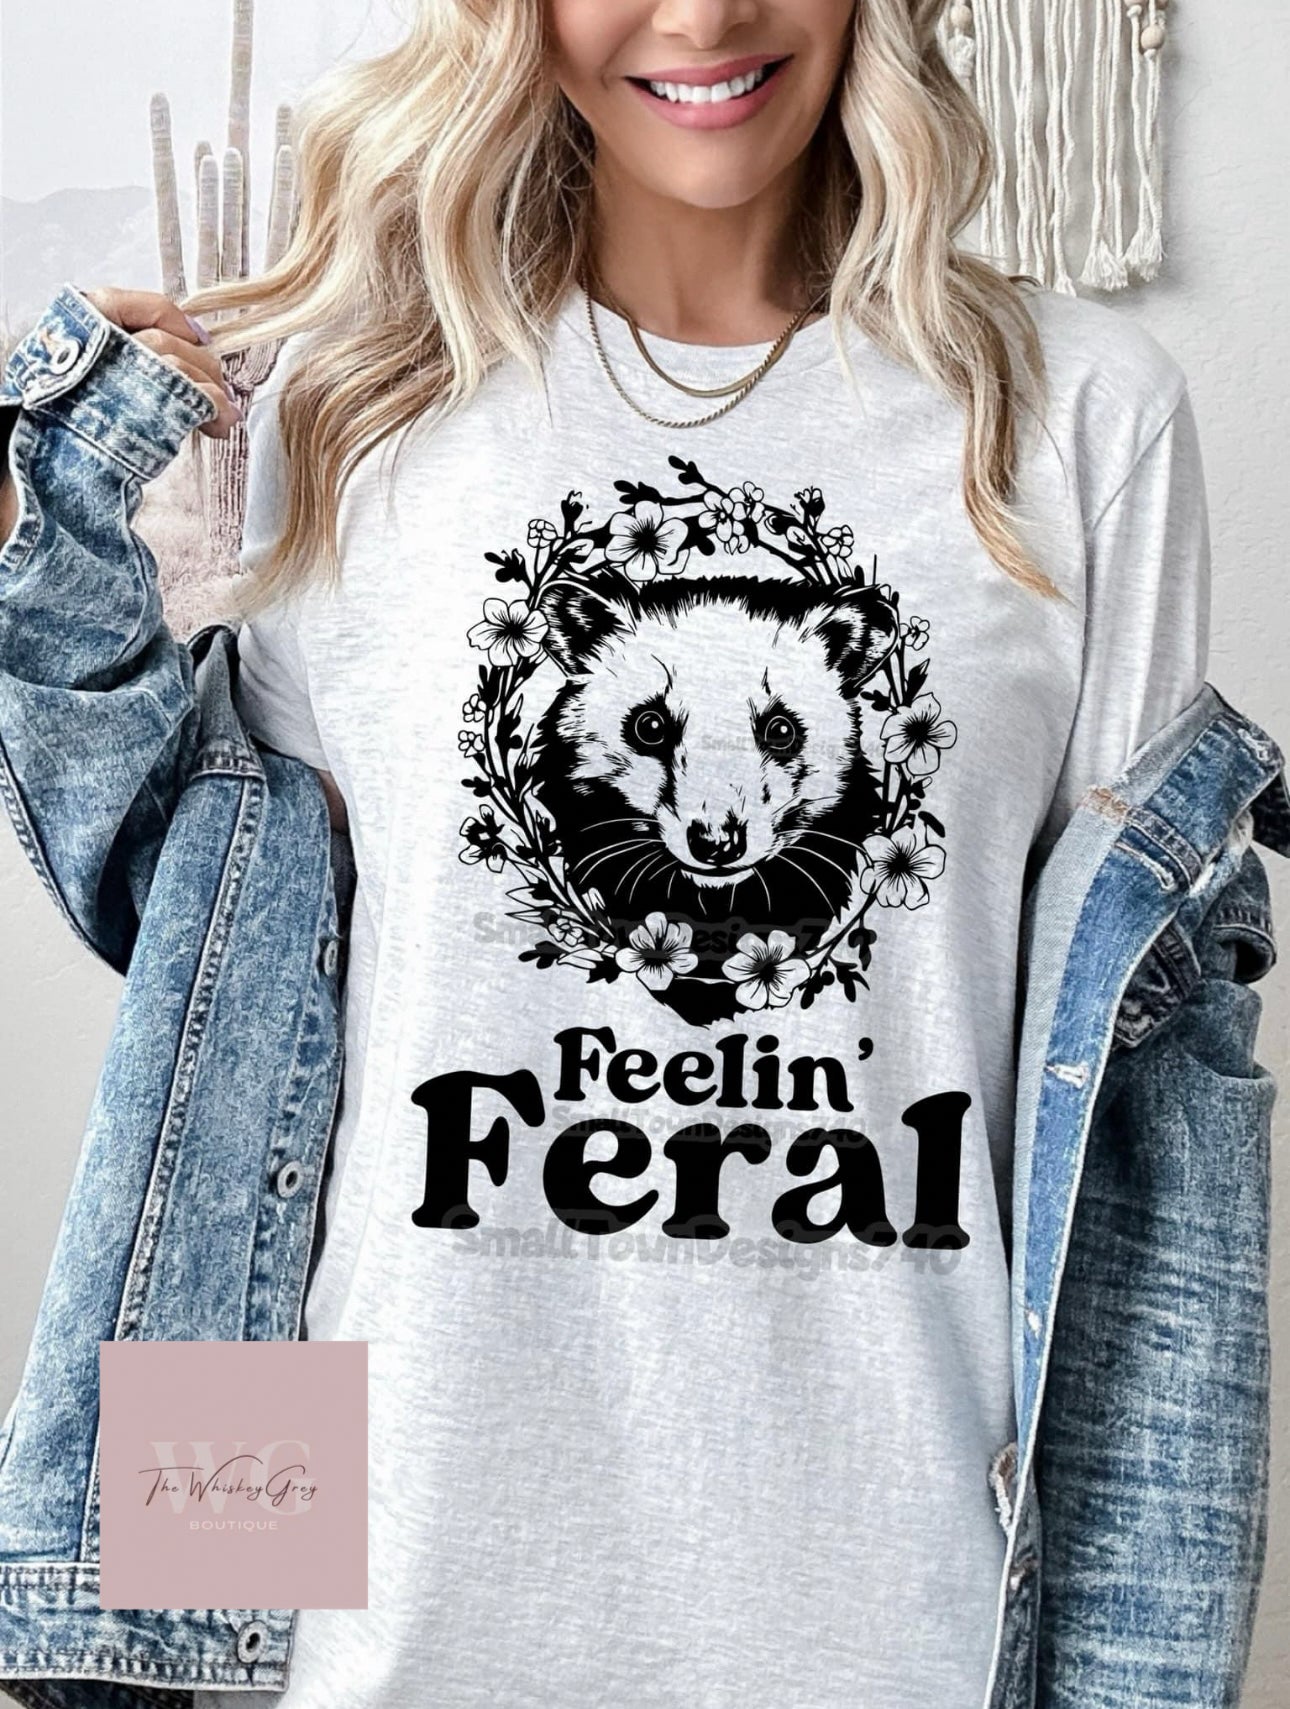 “Feelin Feral”